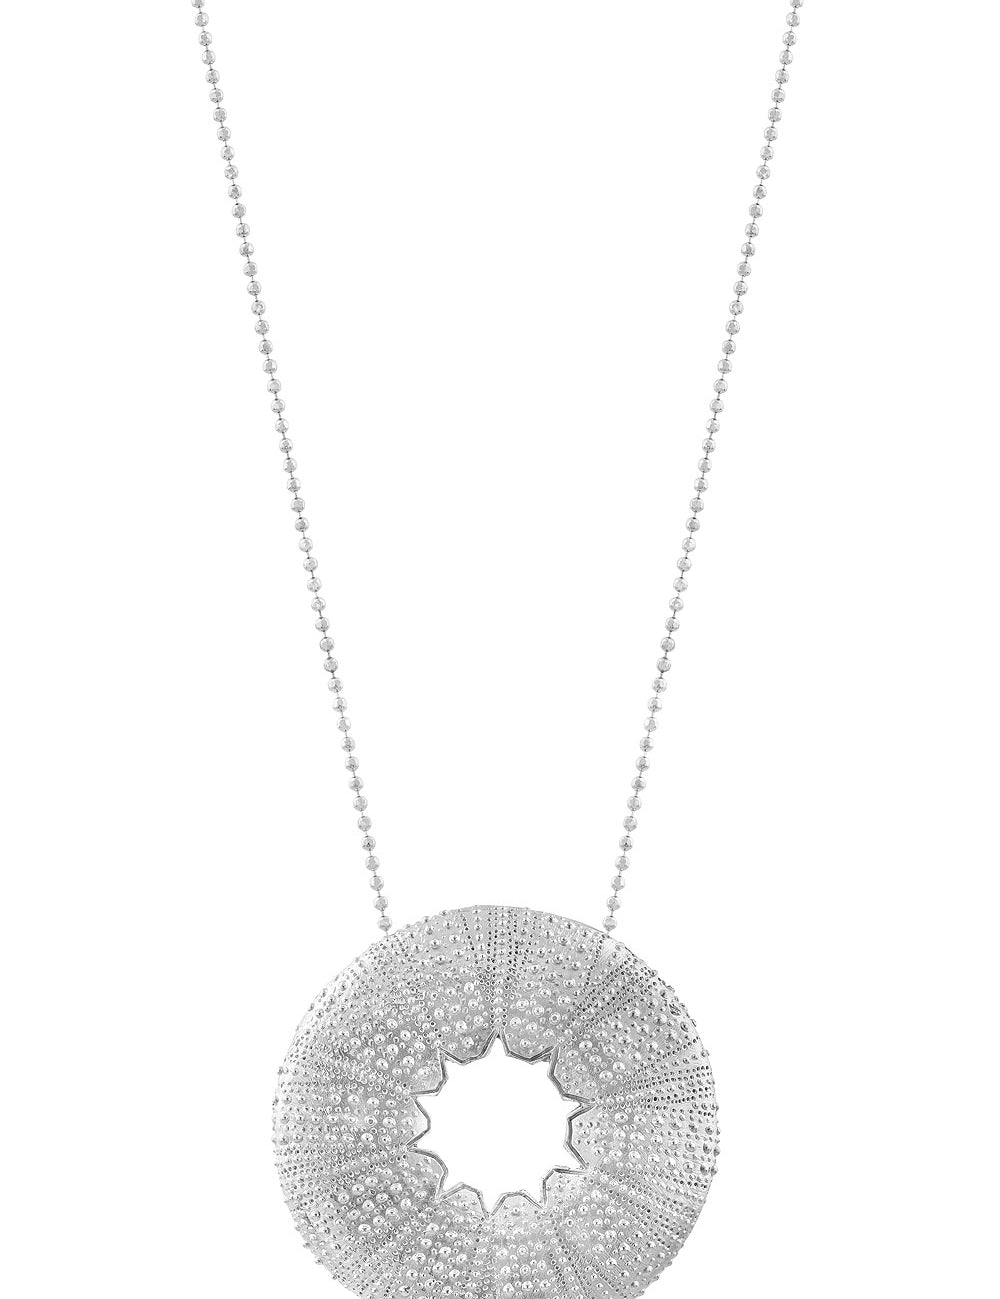 Necklace Sea Urchin Large - Sophie Simone Designs